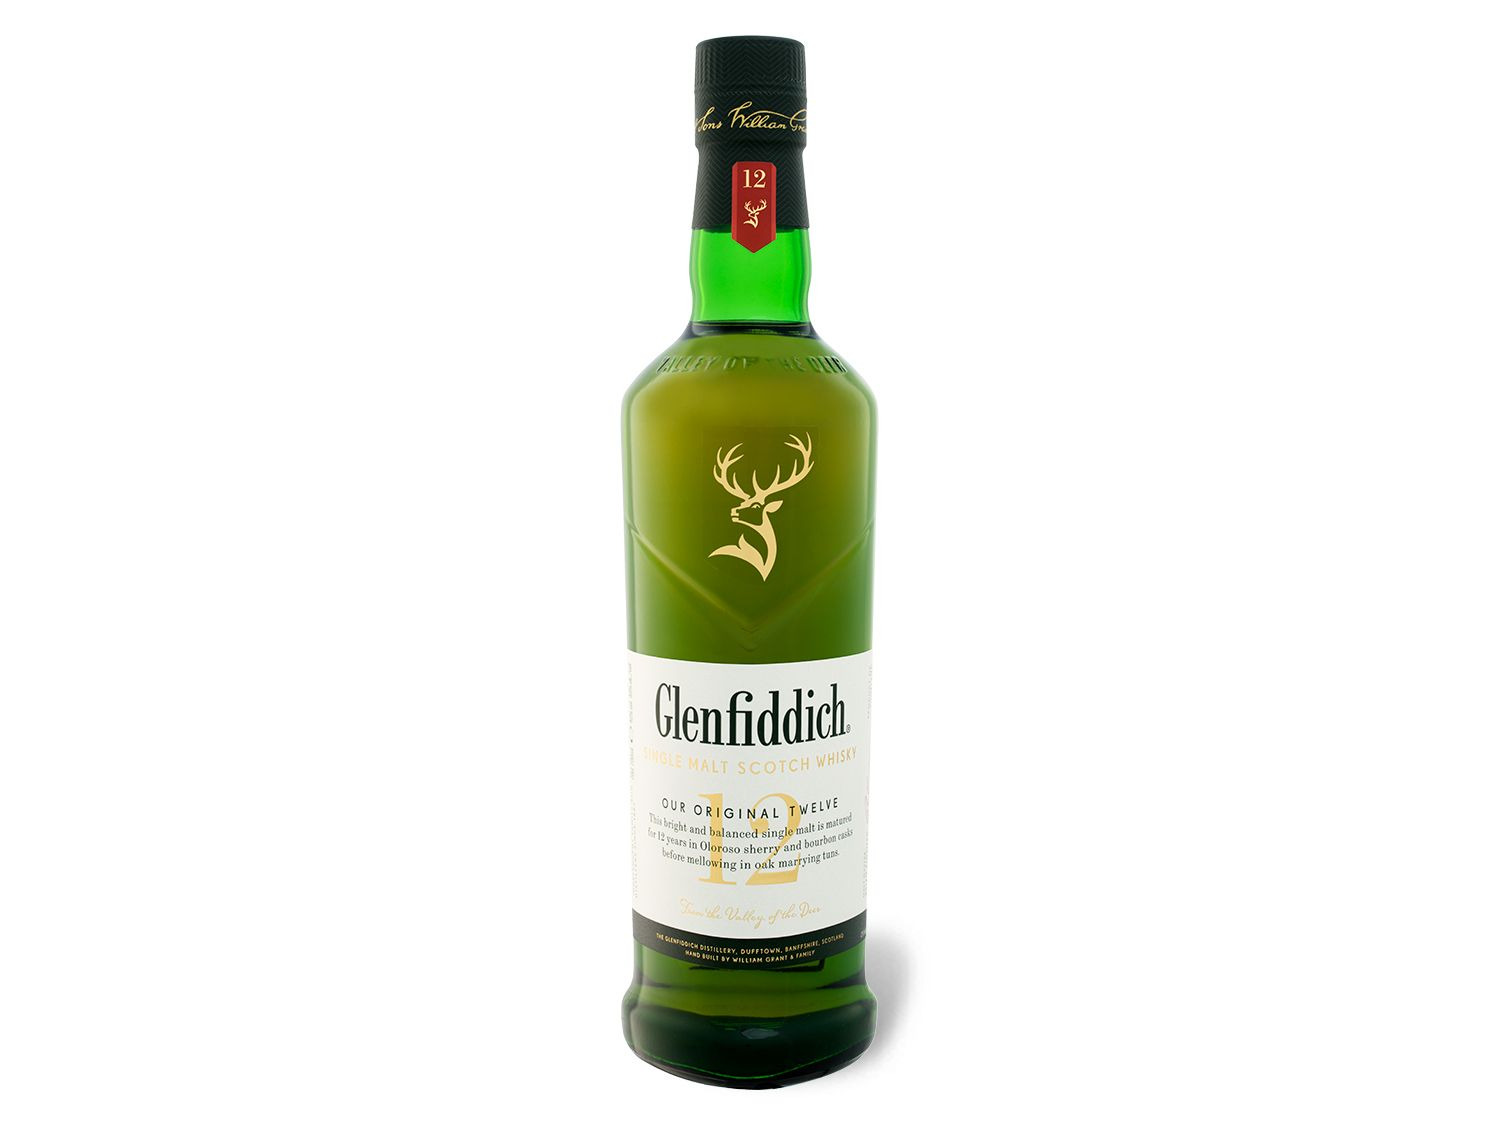 Glenfiddich Signature Whis… Scotch Speyside Malt Single